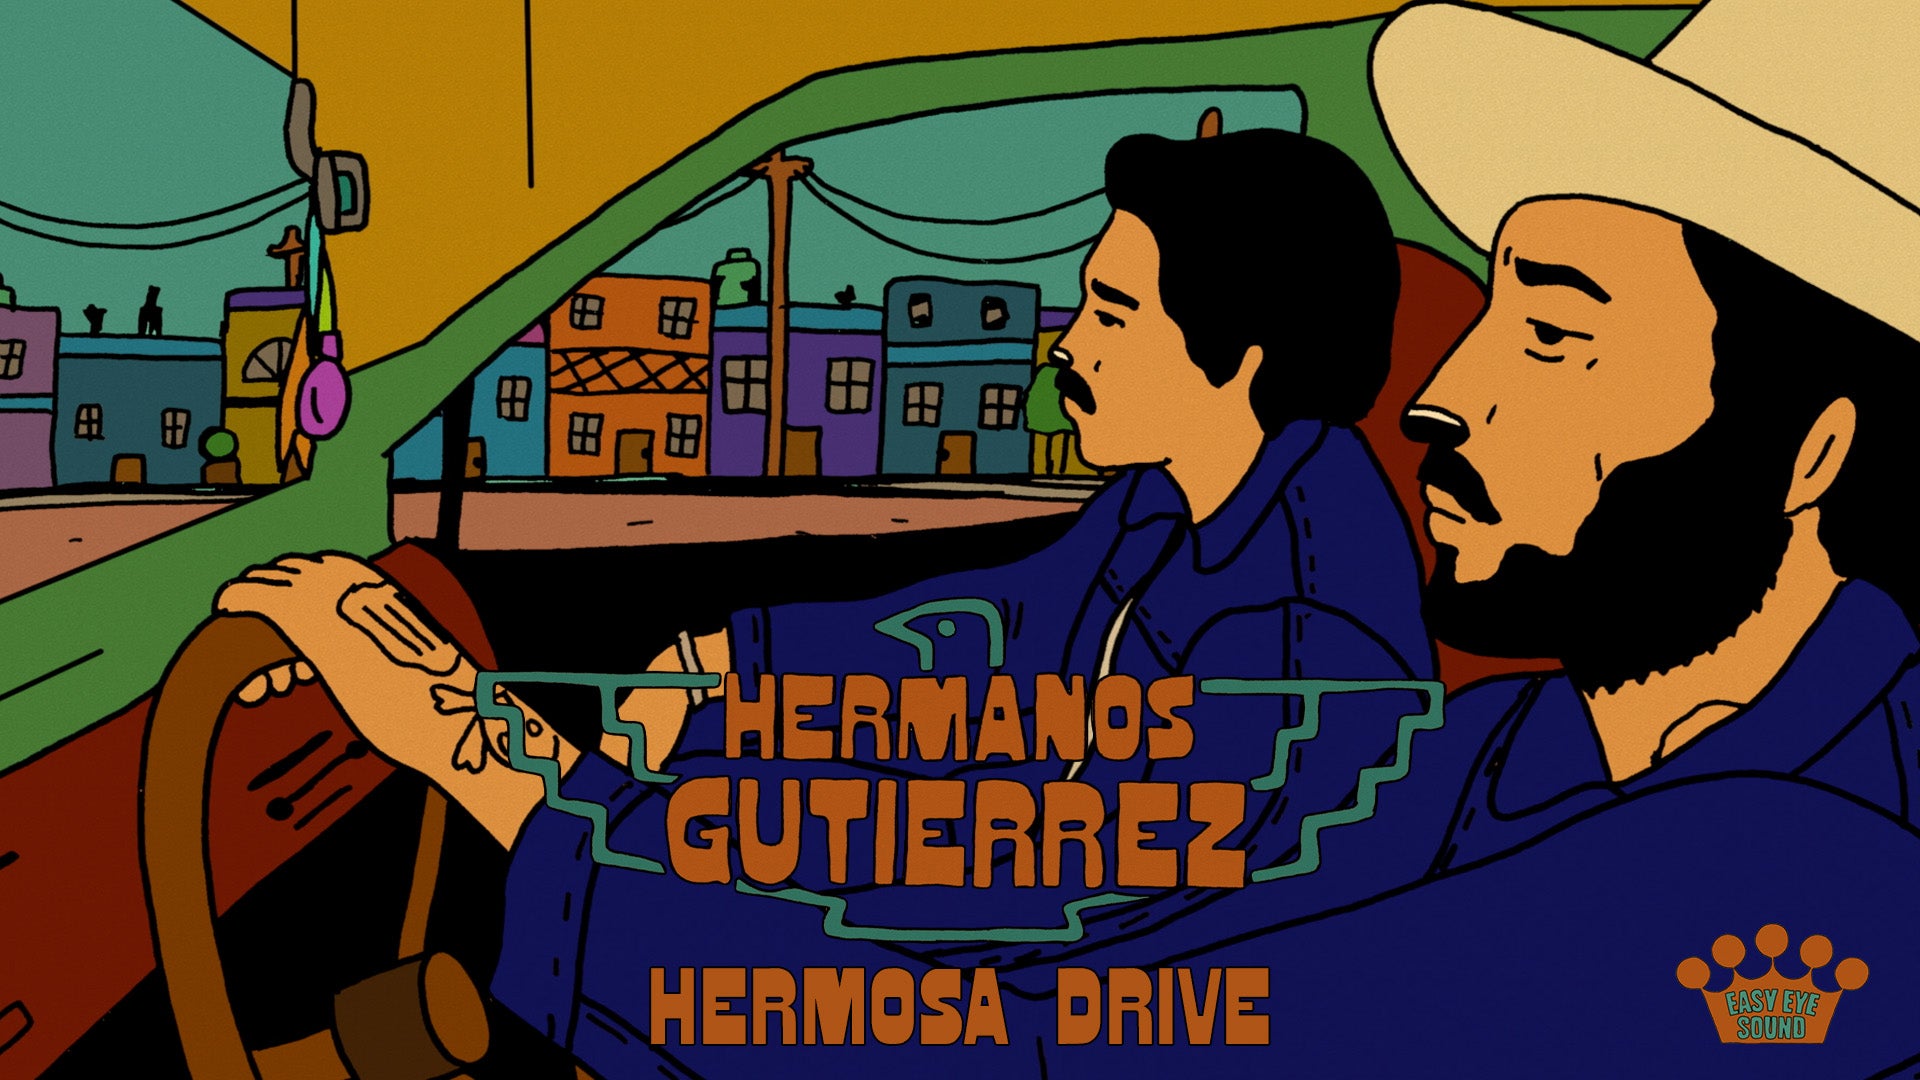 HERMANOS GUTIÉRREZ RELEASES NEW MUSIC VIDEO FOR “HERMOSA DRIVE”